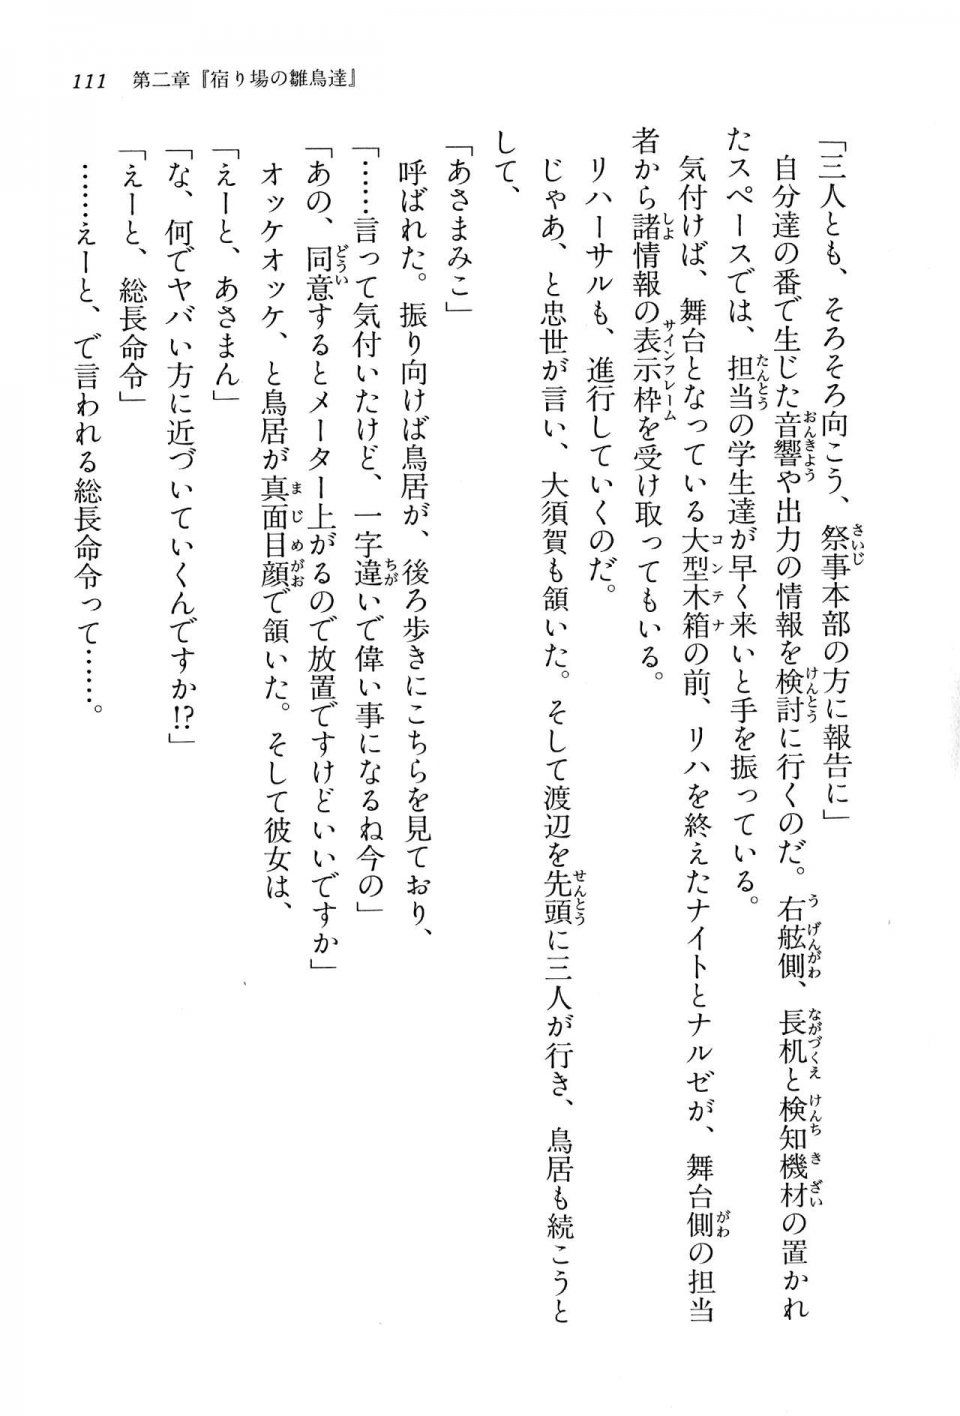 Kyoukai Senjou no Horizon BD Special Mininovel Vol 1(1A) - Photo #115